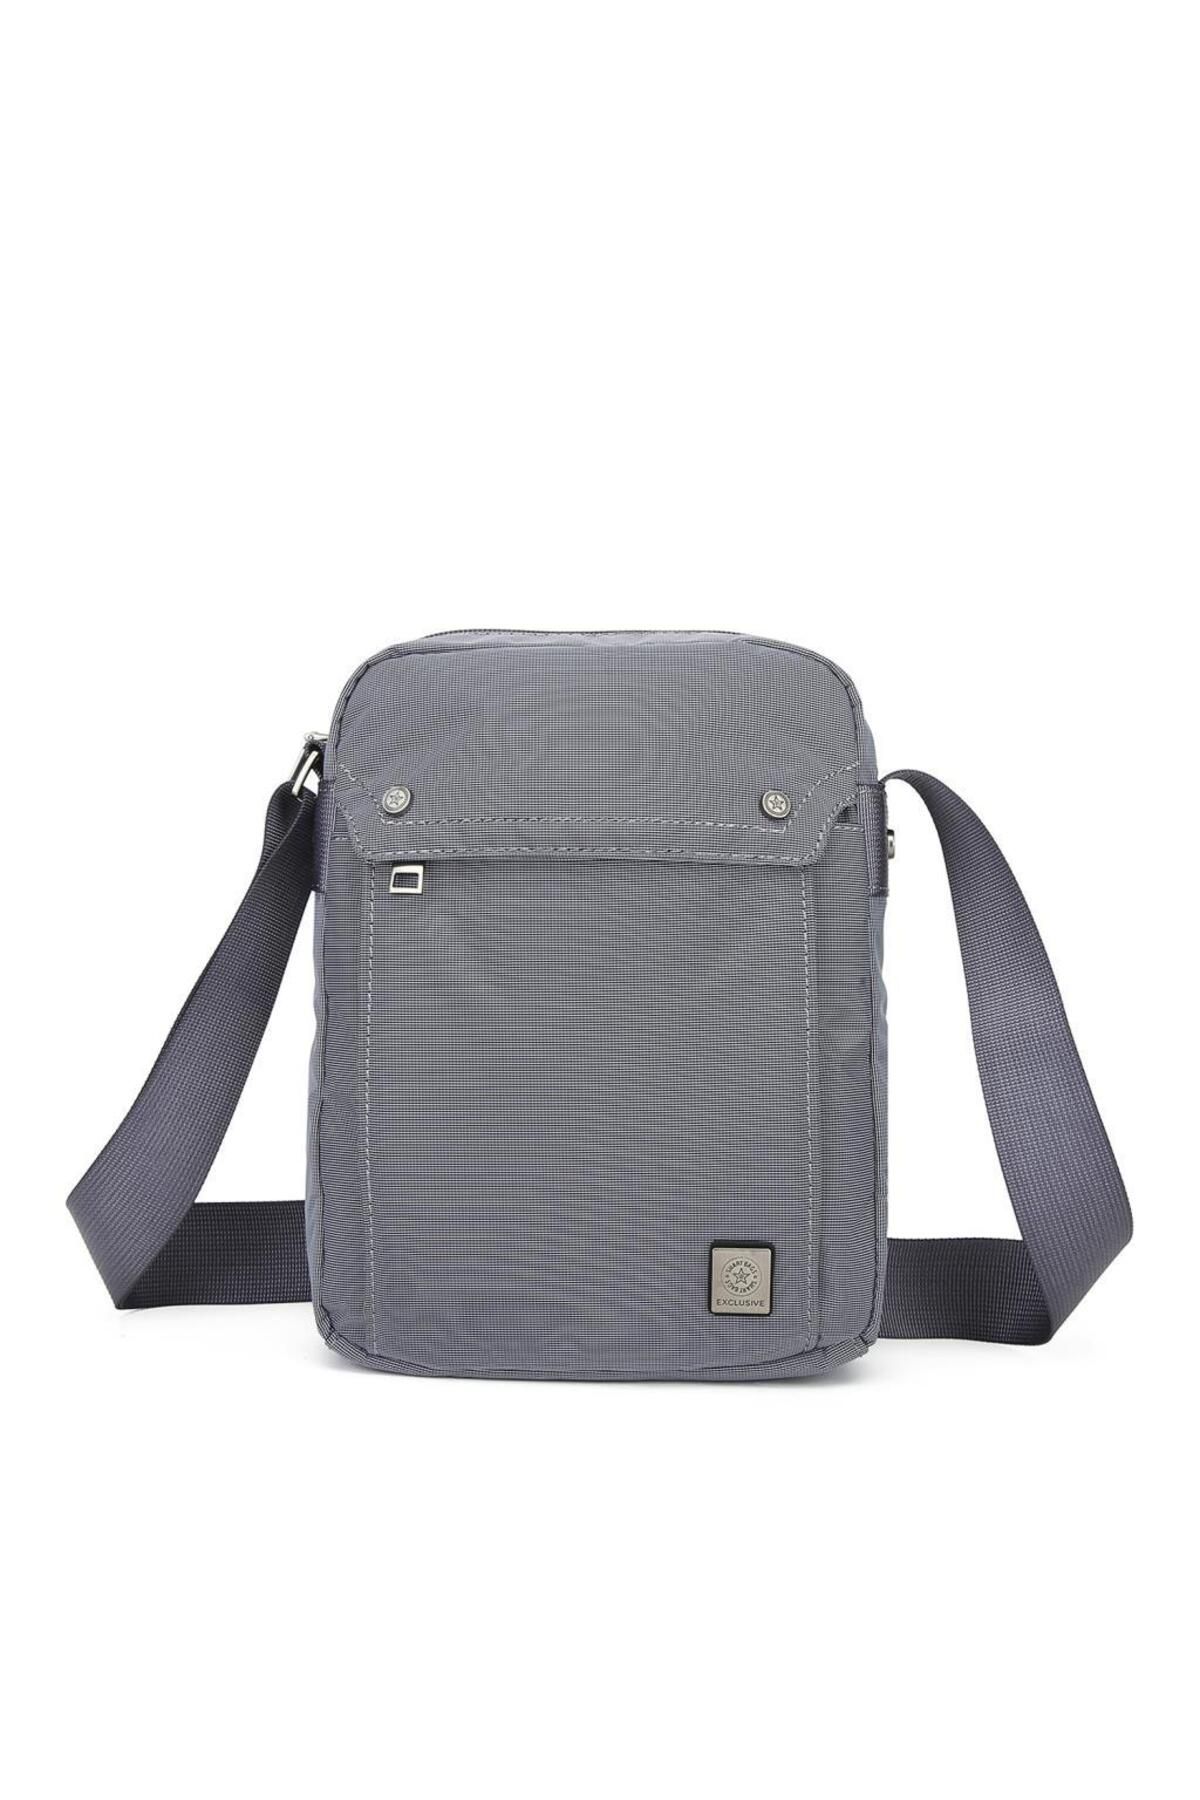 Smart Bags Exclusive Serisi Uniseks Postacı Çantası Smart Bags 8700